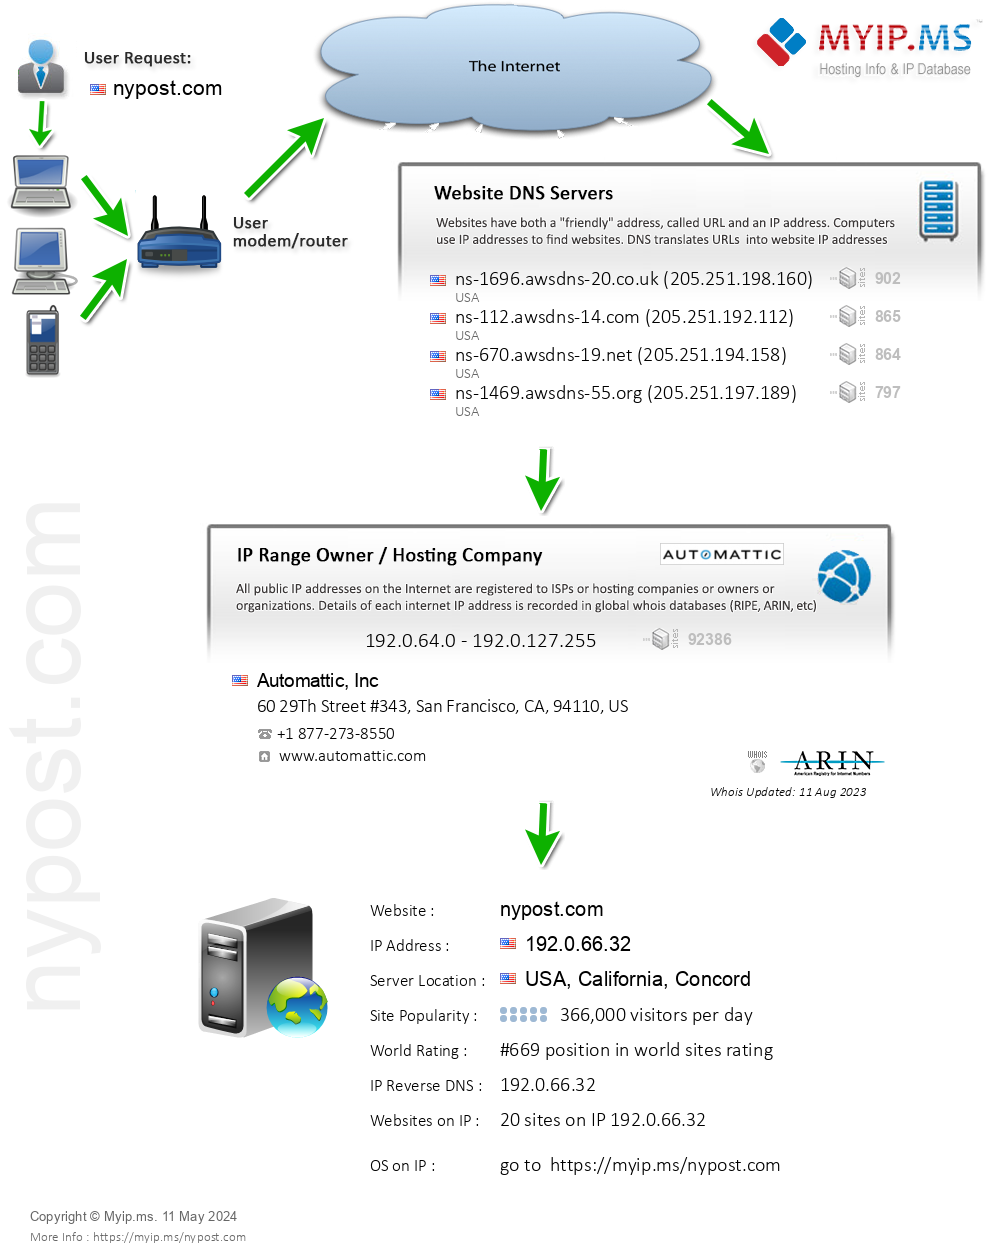 Nypost.com - Website Hosting Visual IP Diagram